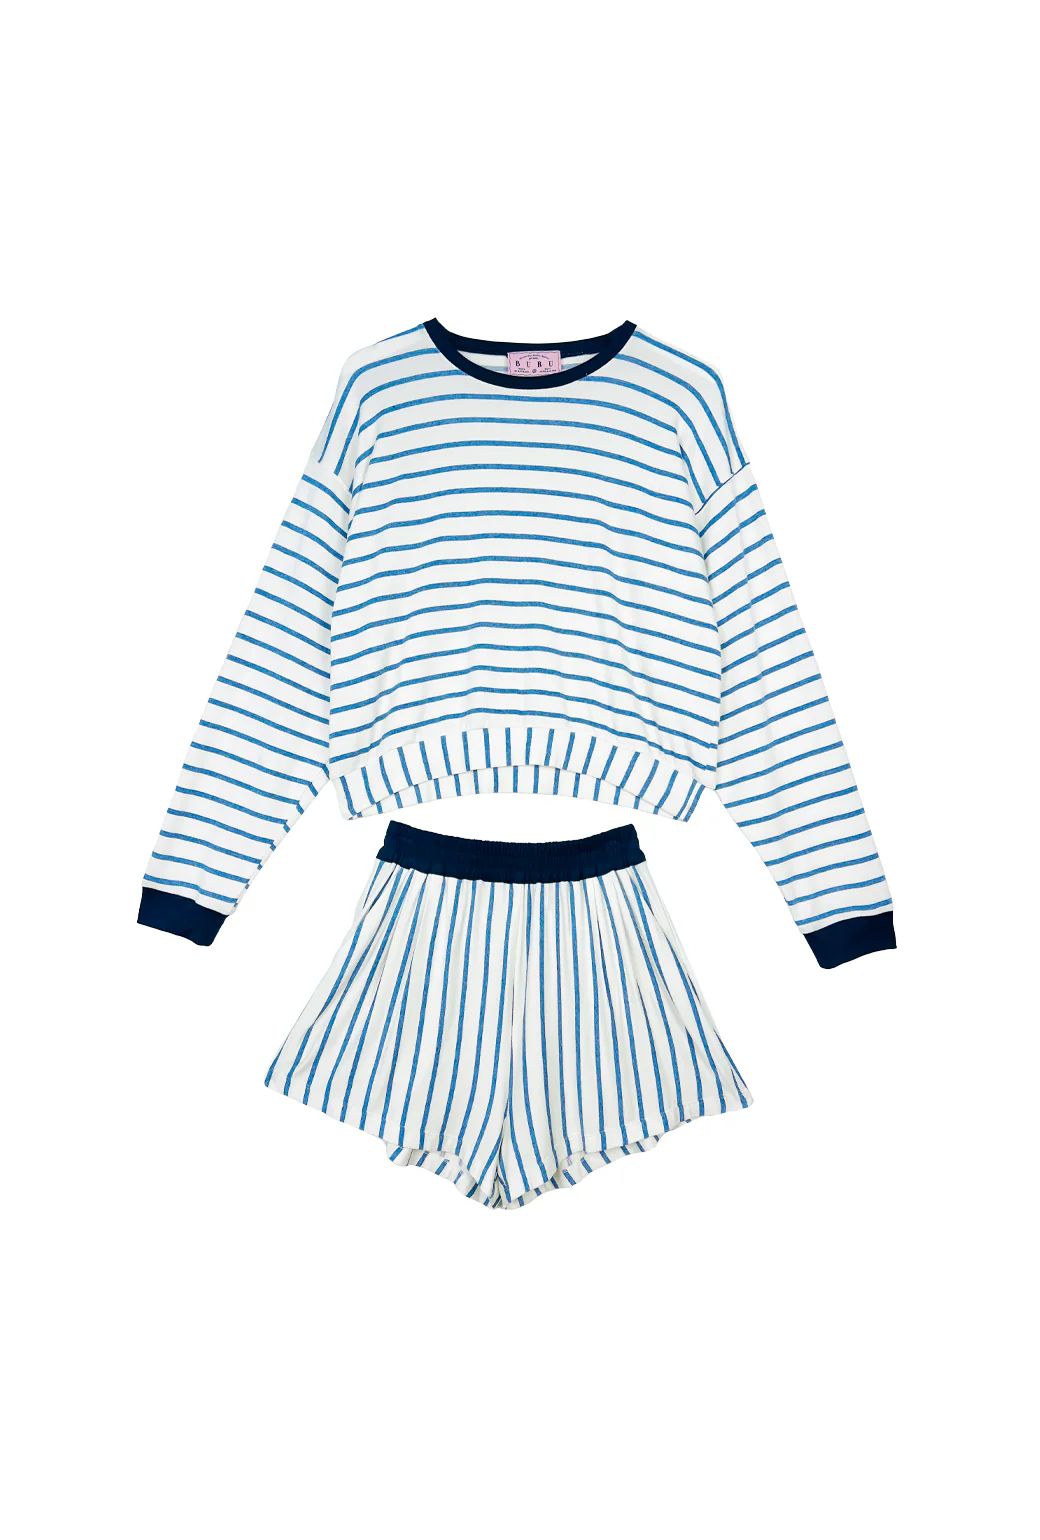 Buru x Jaimie Dewberry Pullover Set - Blue Stripe | Shop BURU